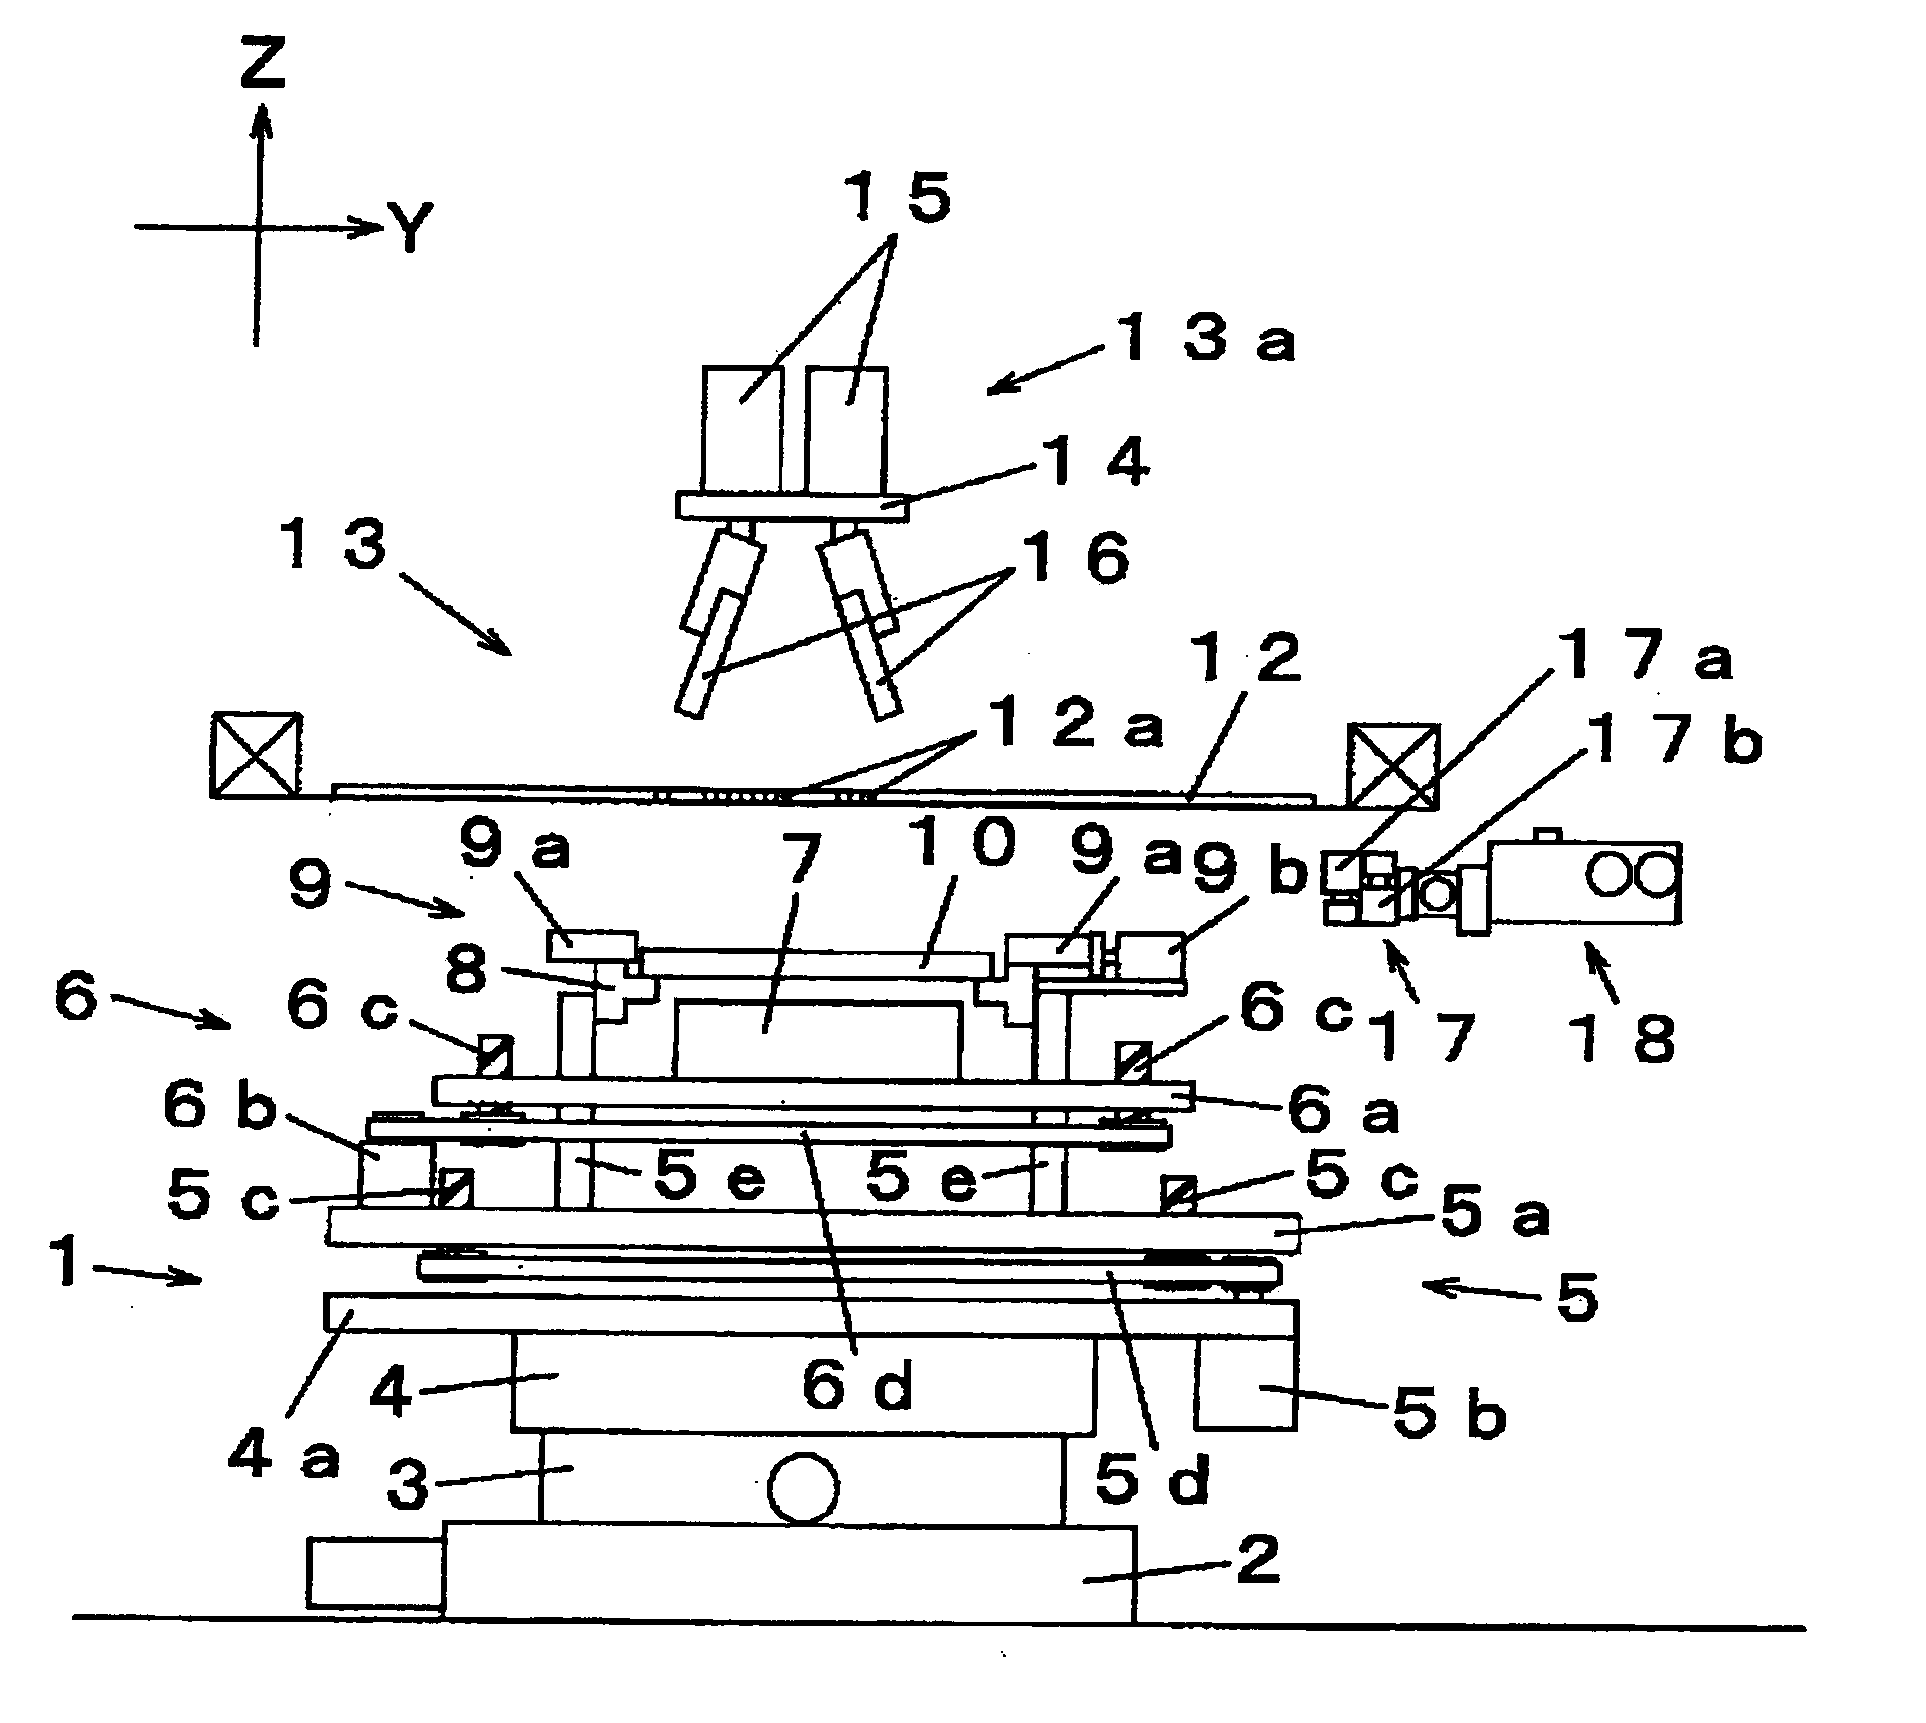 Screen printing apparatus and screen printing method